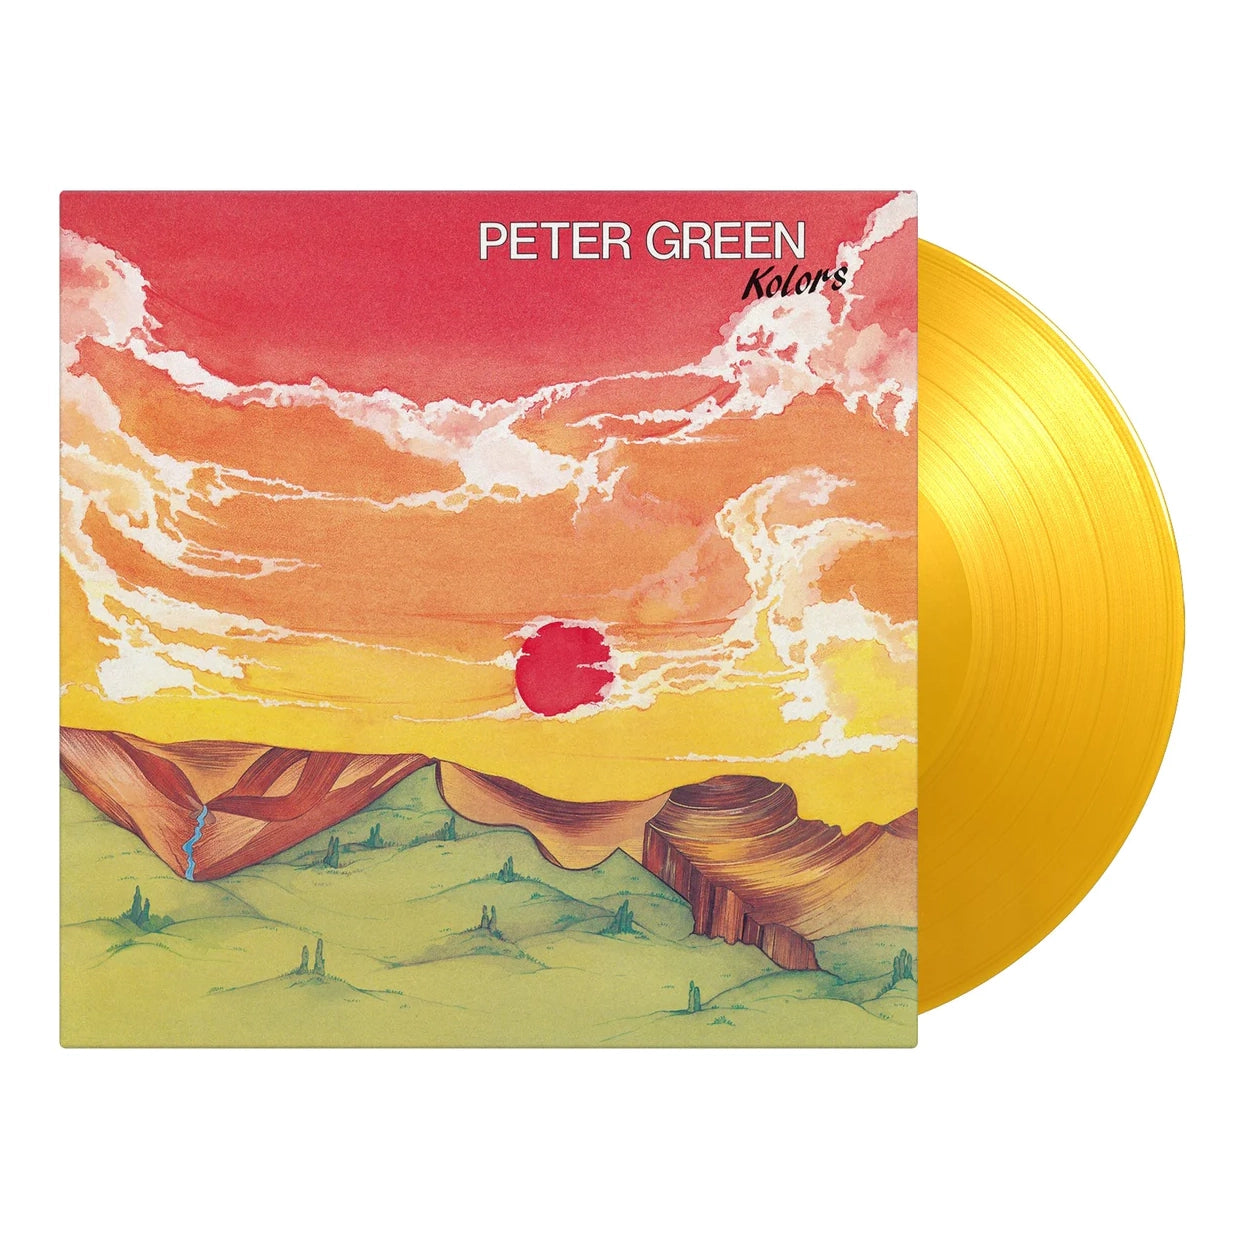 Peter Green - Kolors: Limited Translucent Yellow Vinyl LP